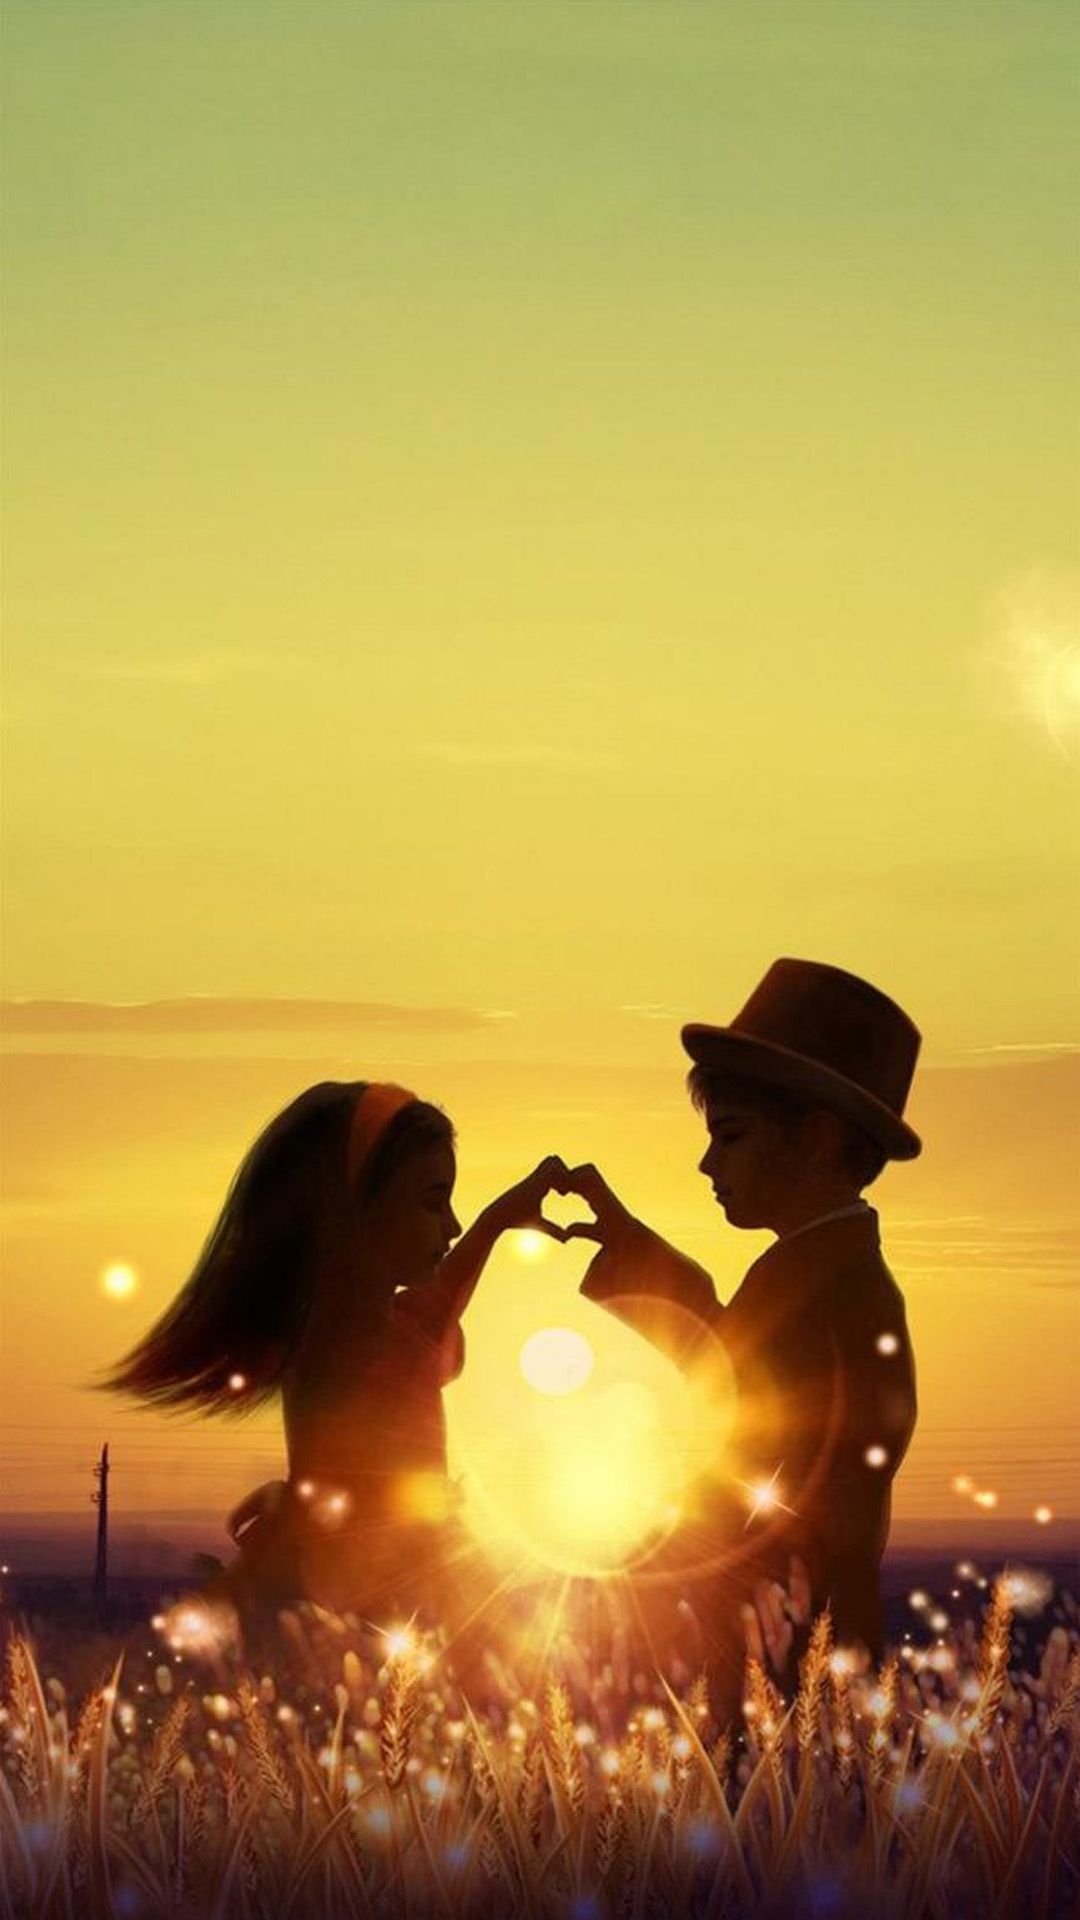 Sunset Love Cute Kids Couple Sunlight Flowers Field iPhone 8 Wallpaper Free Download